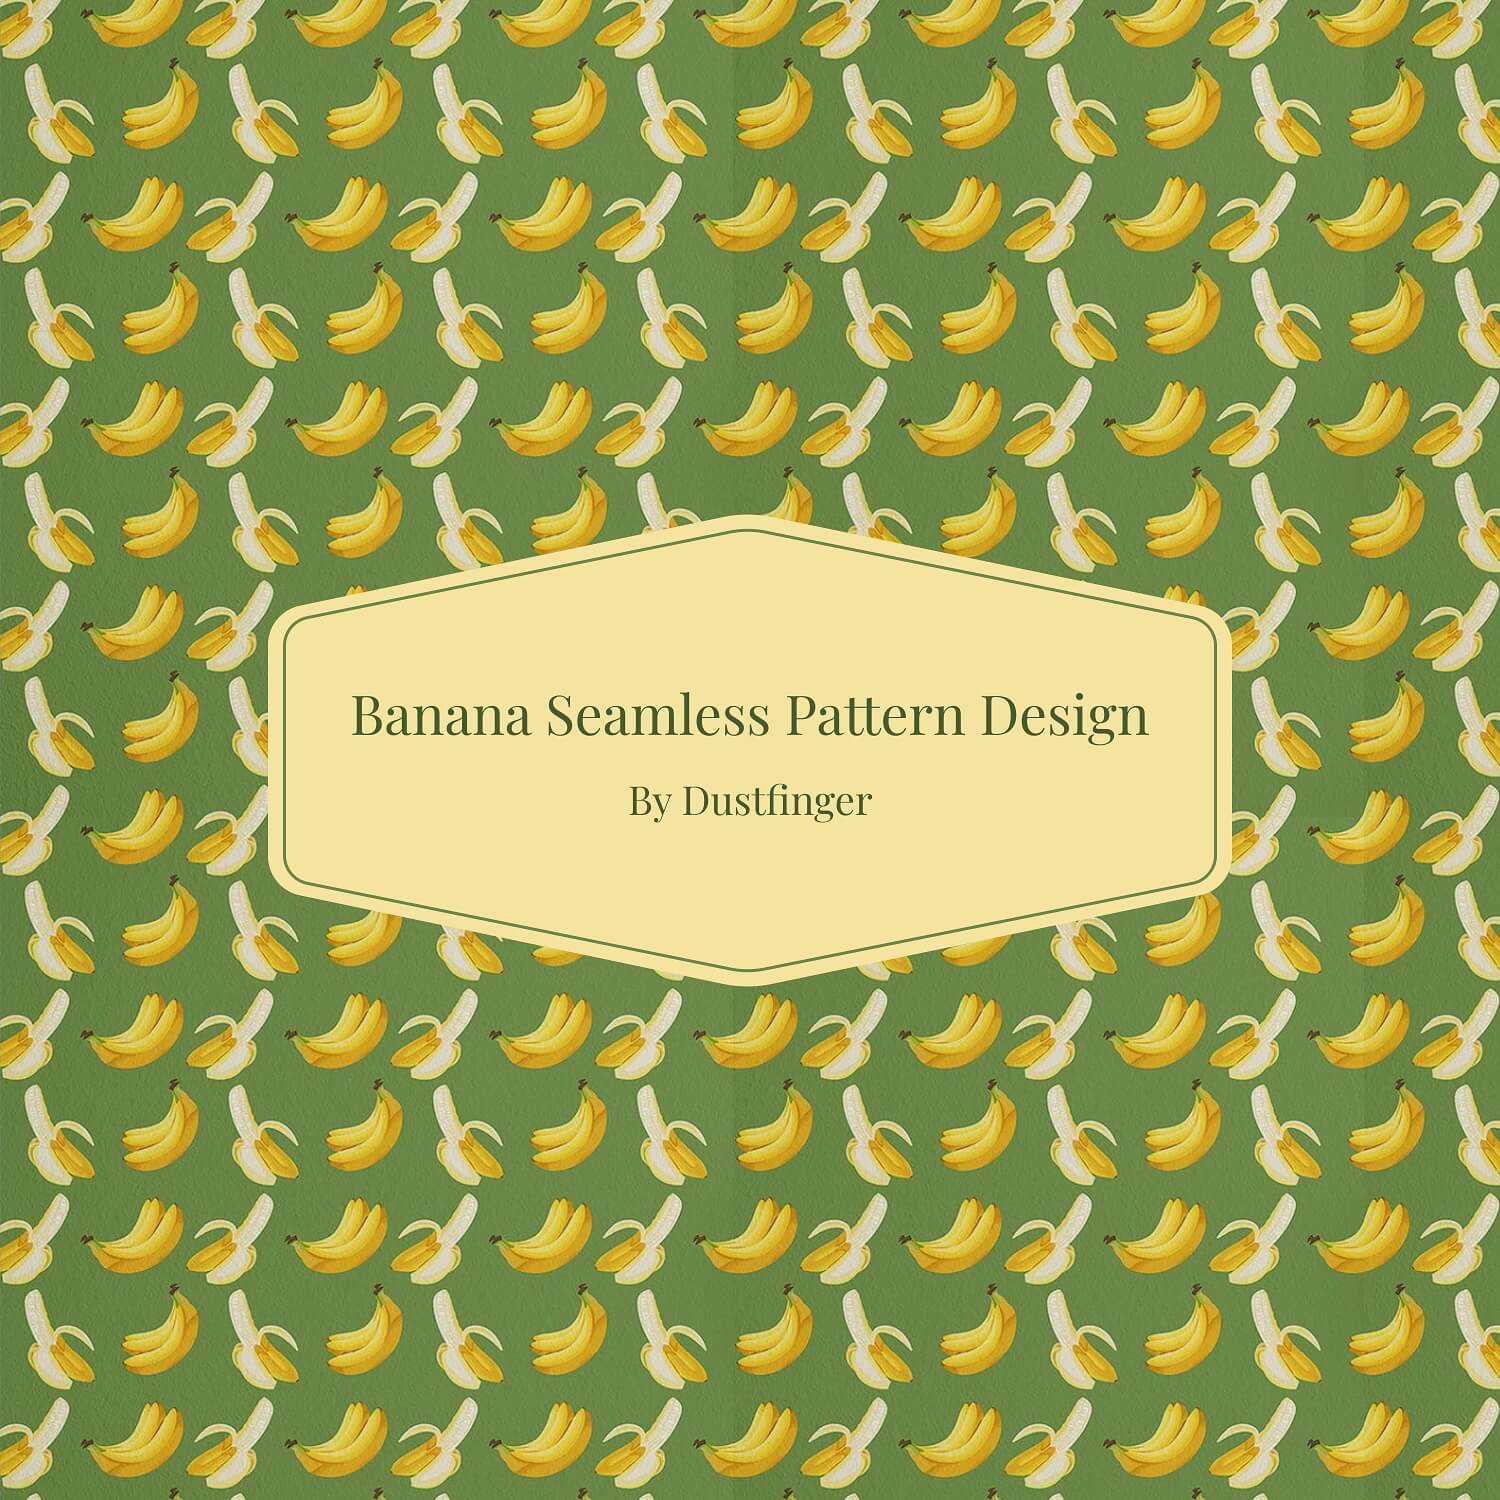 Banana Seamless Pattern Design.